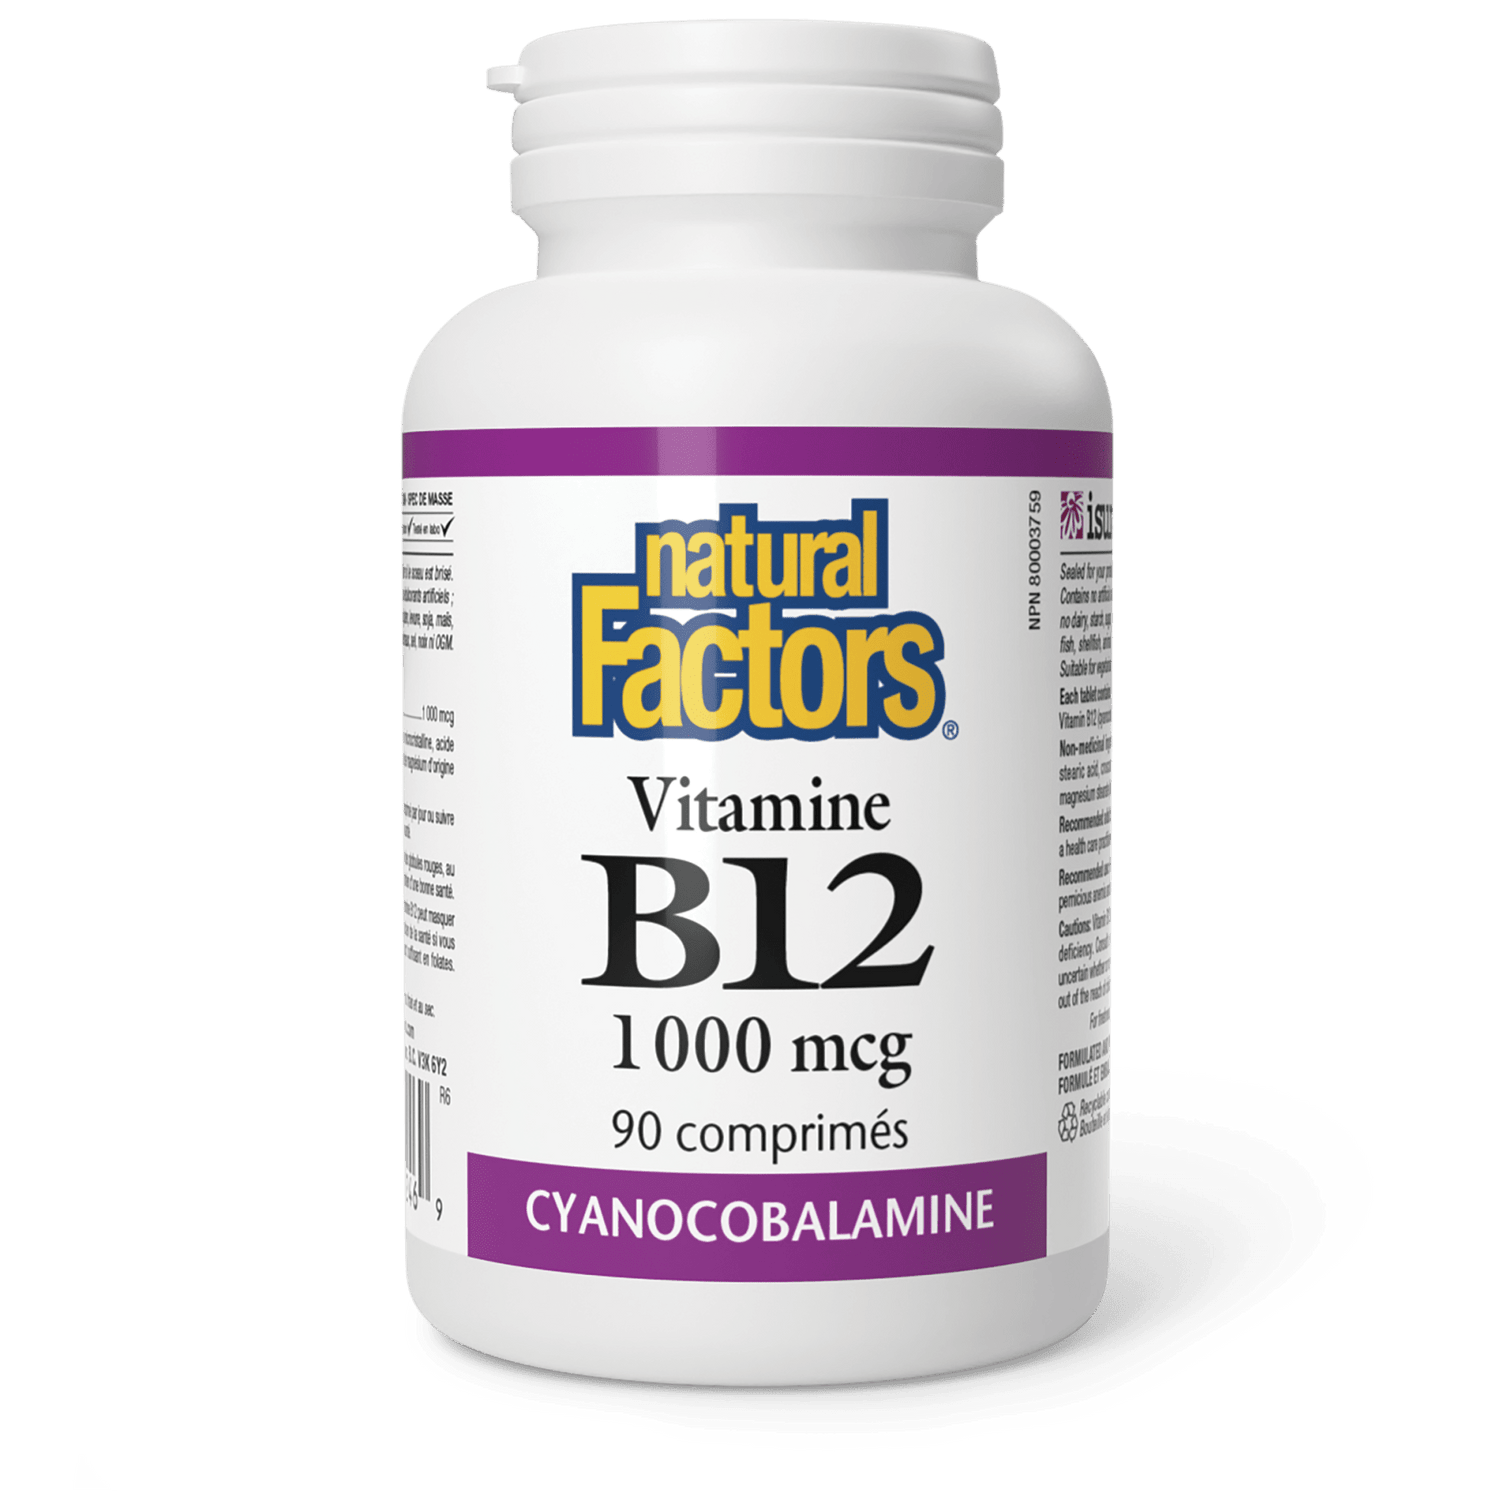 Vitamine B12 1 000 mcg, Natural Factors|v|image|1246